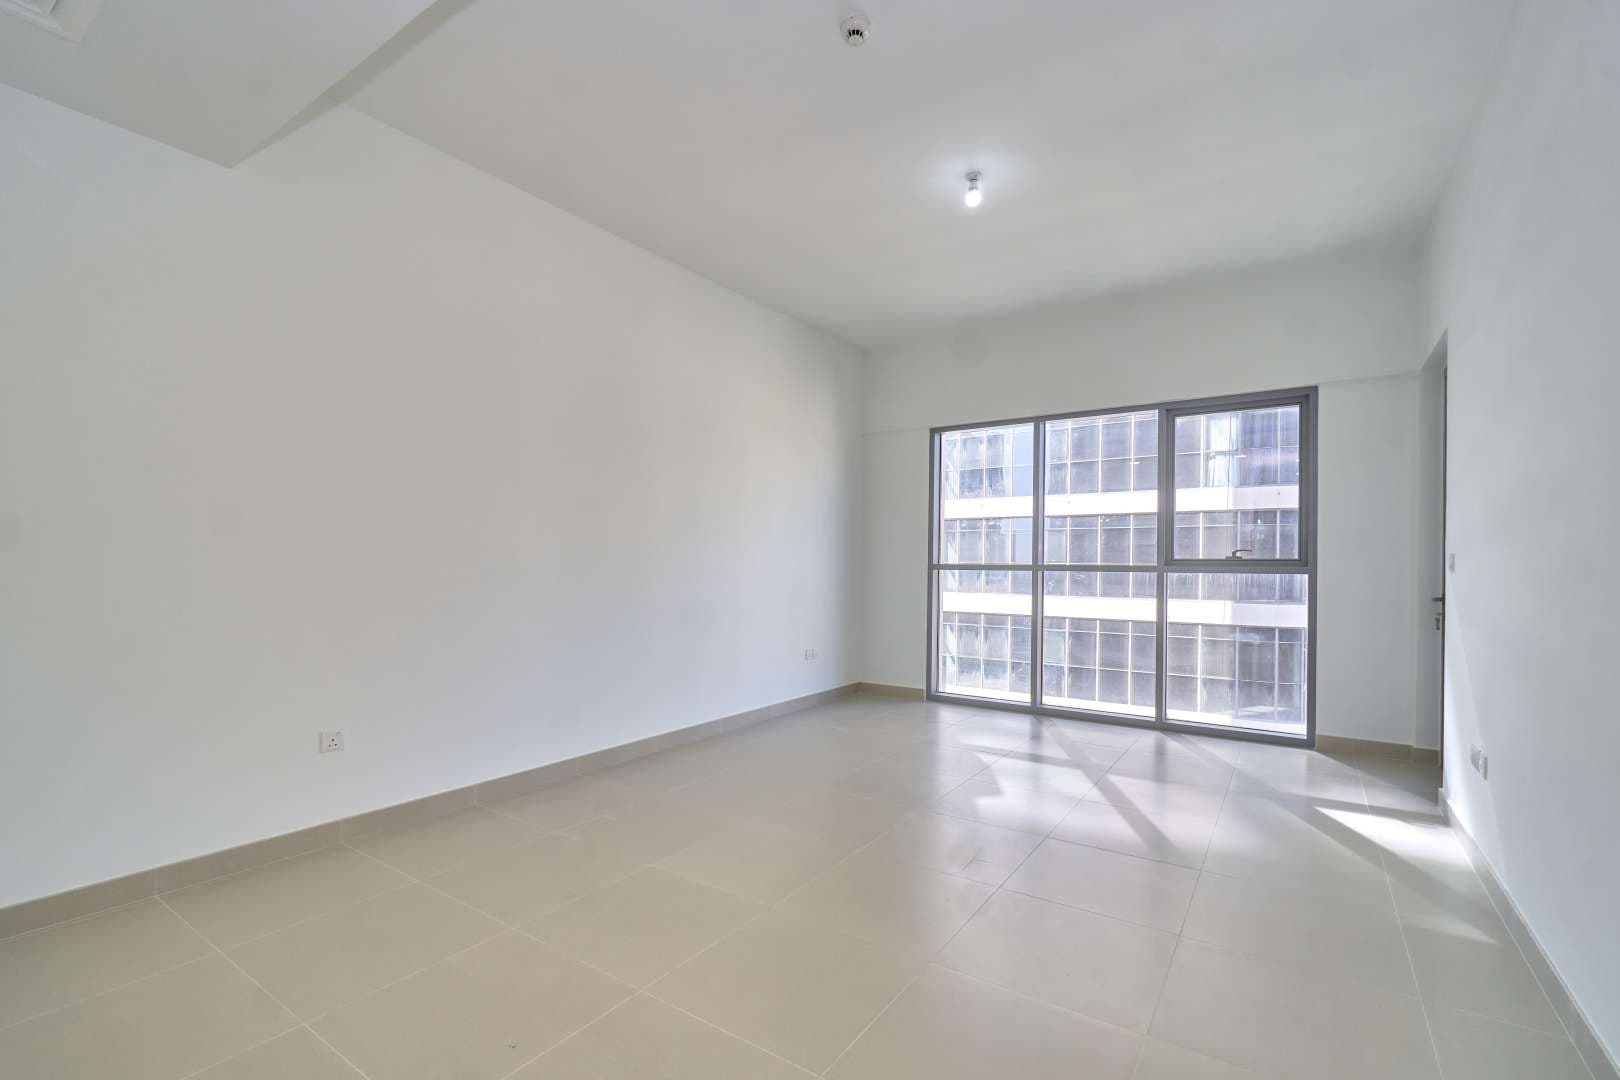 1 Bedroom Apartment For Rent Bellevue Towers Lp10078 164e1f66895ca200.jpg